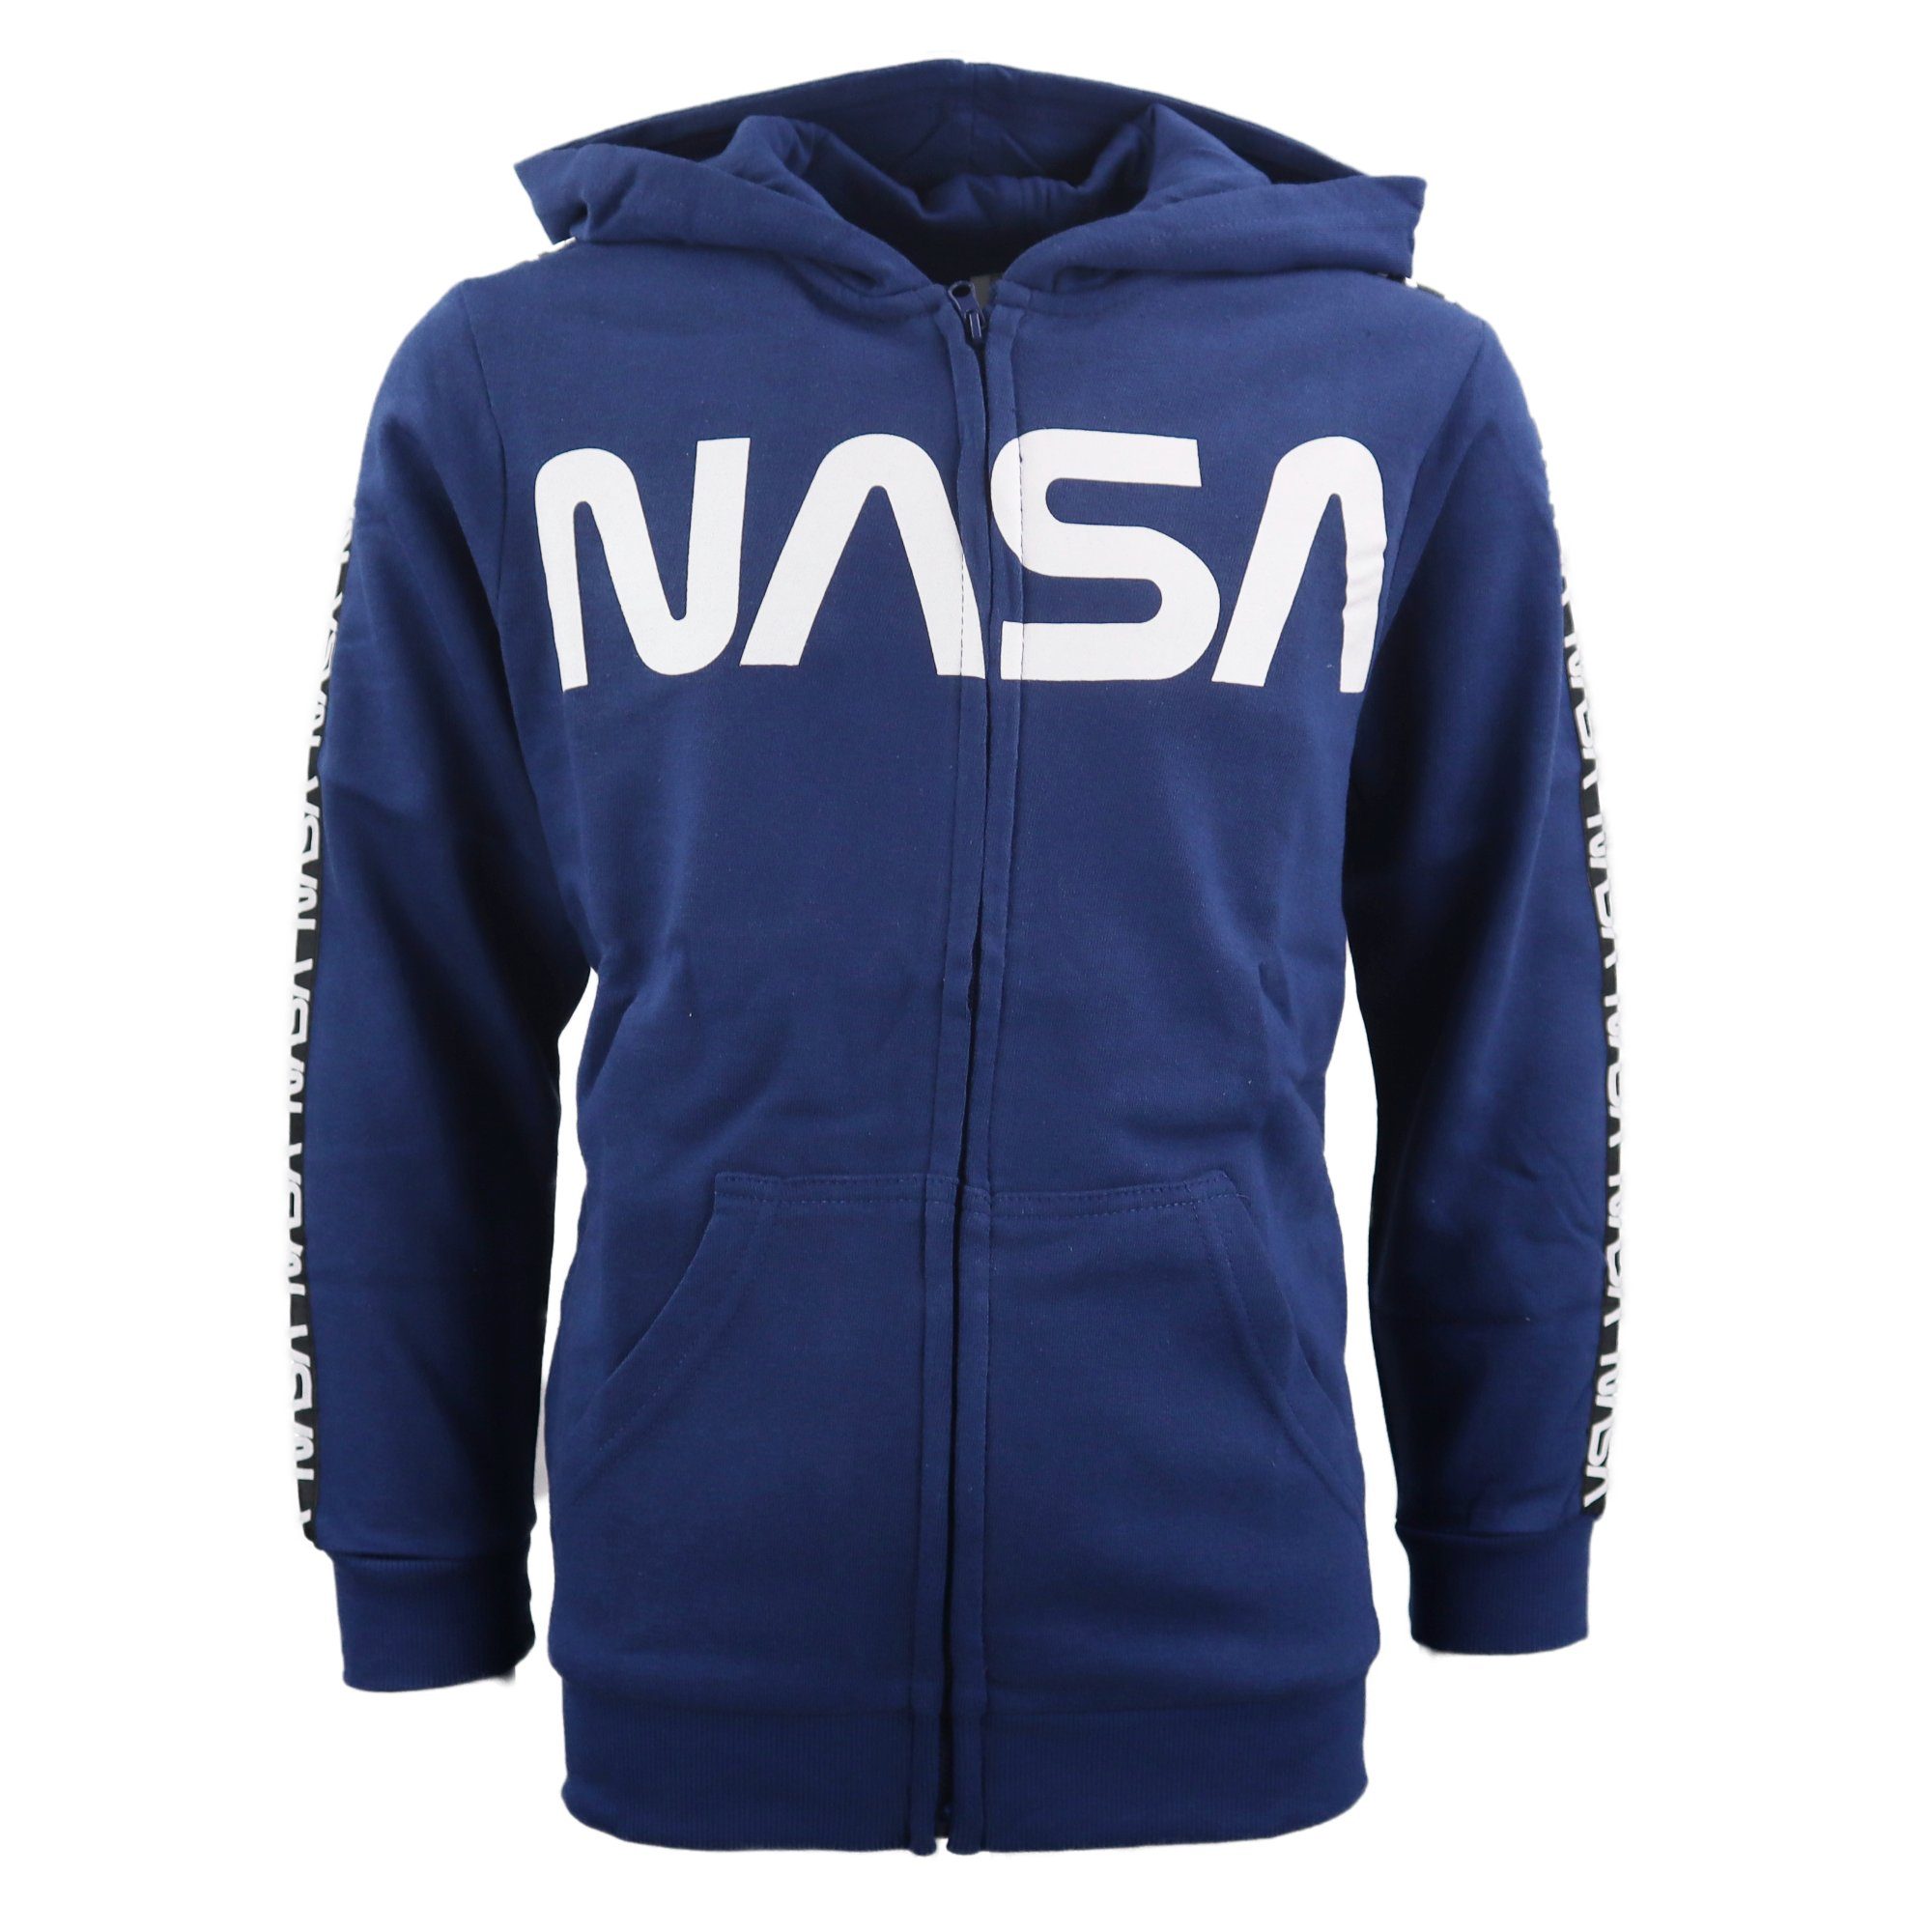 NASA Hoodie NASA Jungen 164, Blau Pulli 100% Baumwolle, 134 Kapuzen Gr. Jugend bis Kinder